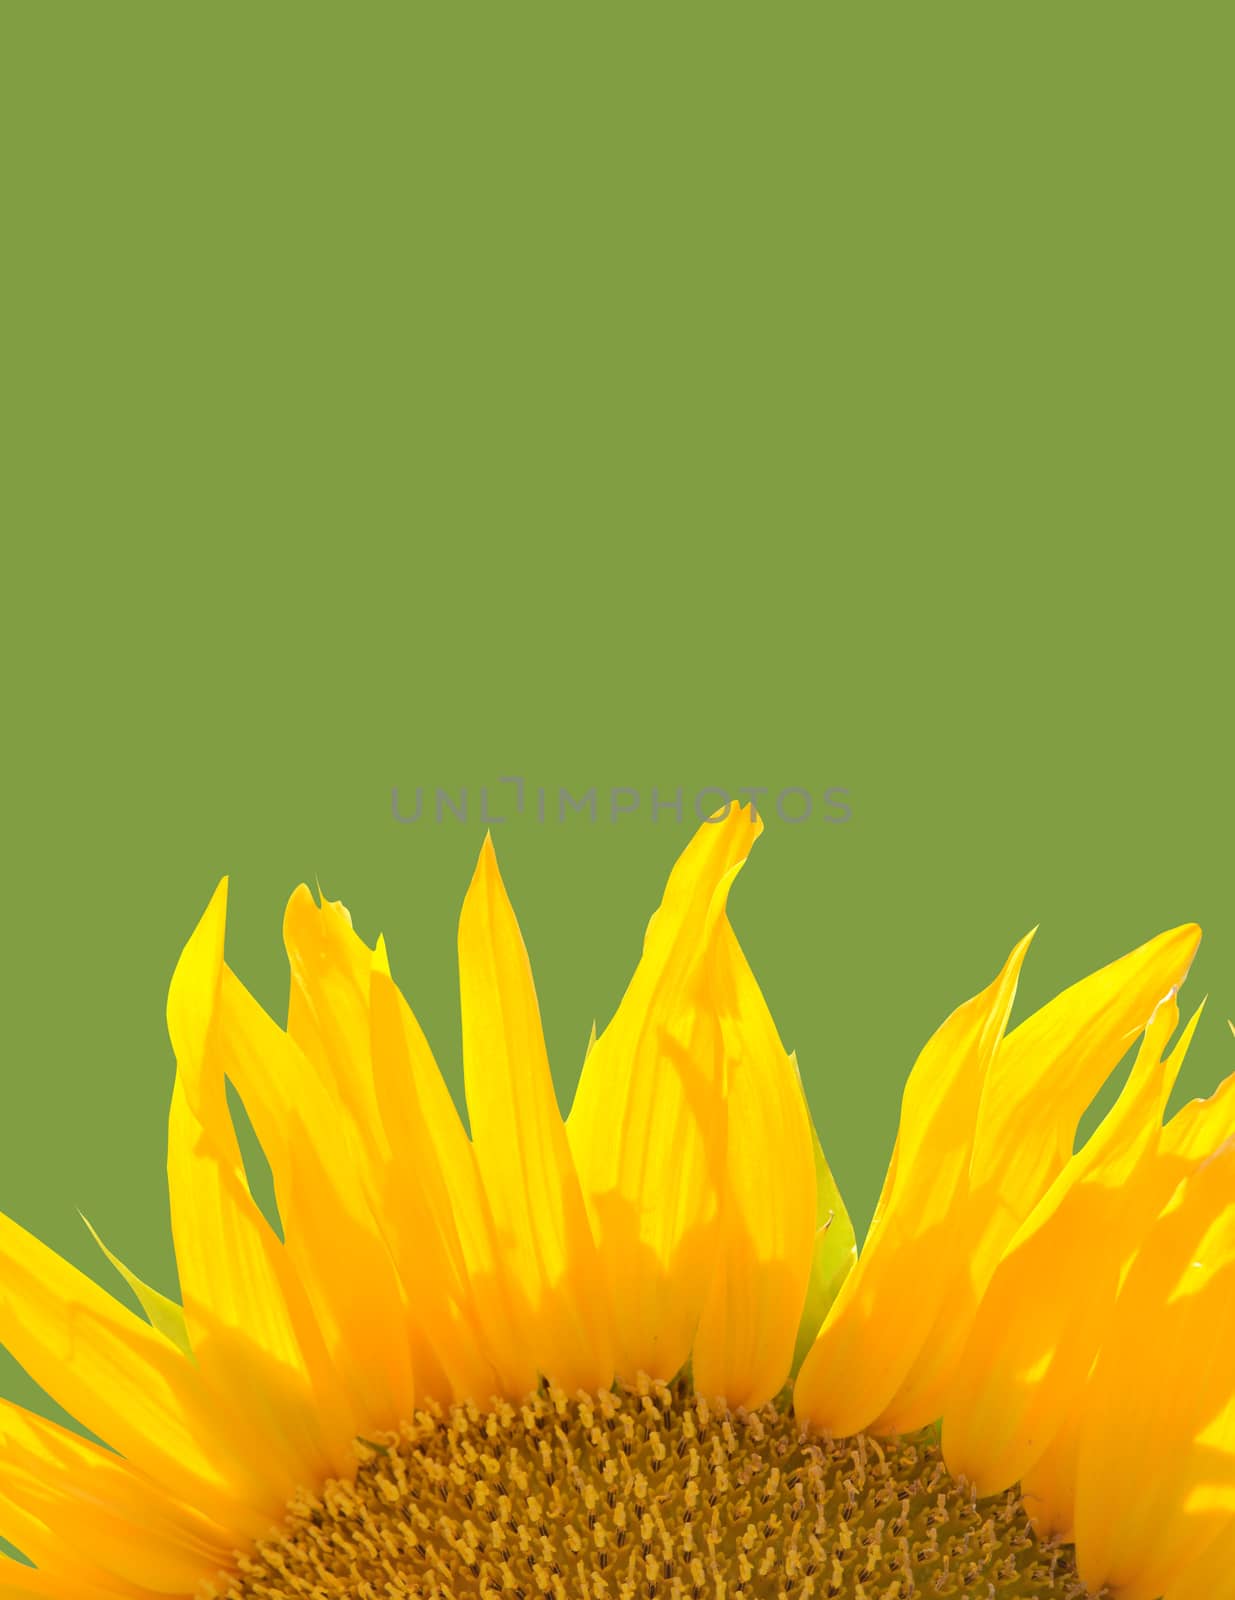 Isolated Sunflower by mrdoomits